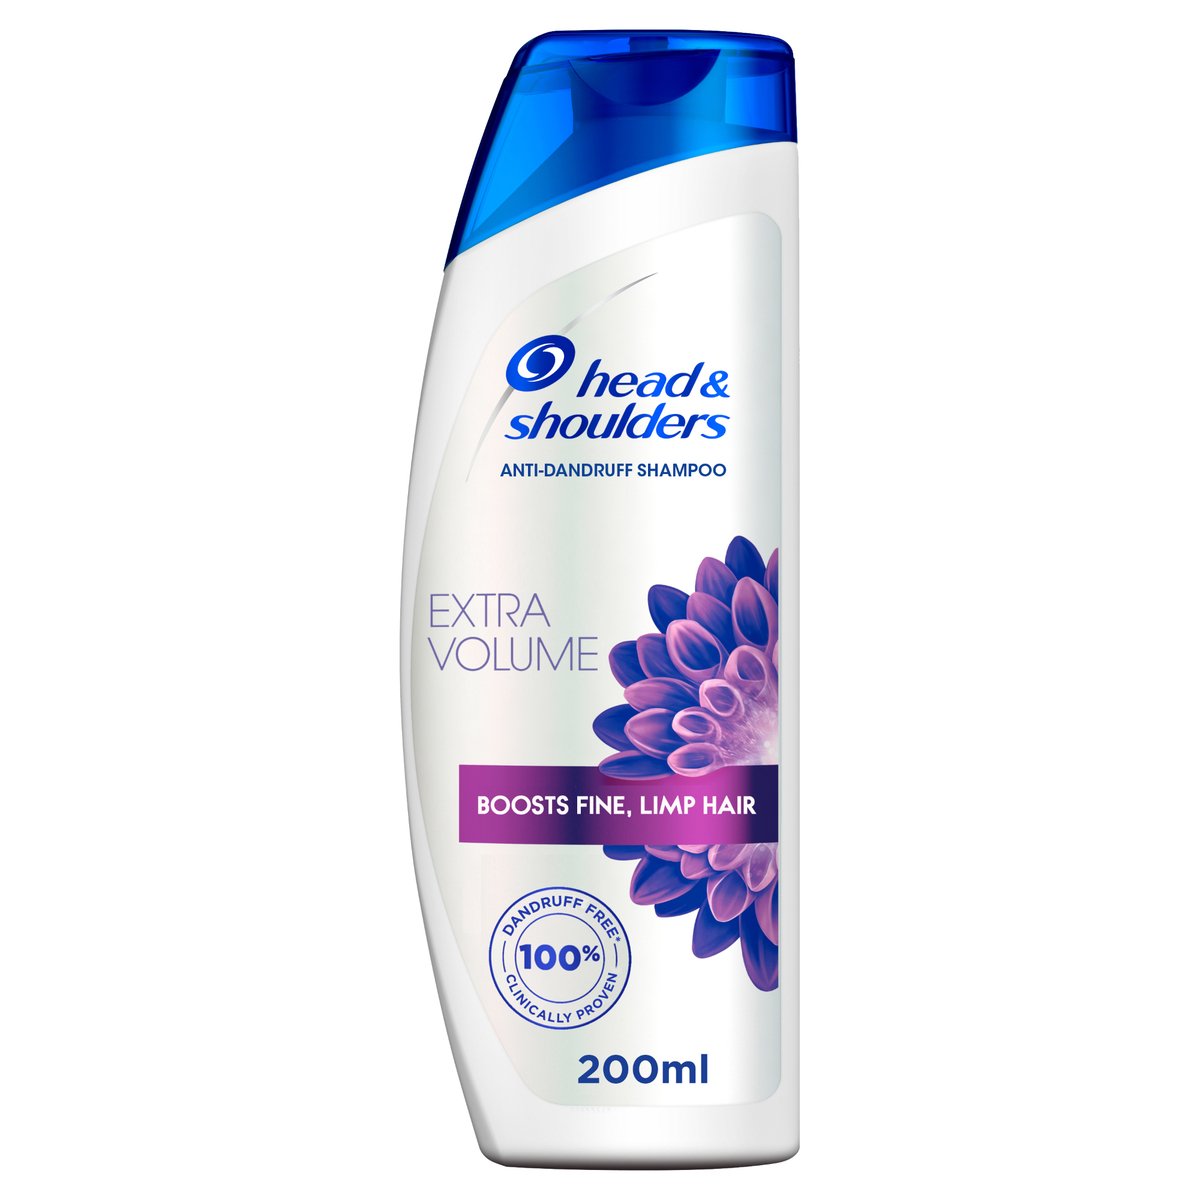 Head & Shoulders Extra Volume Anti-Dandruff Shampoo for Fine and Limp Hair 200 ml